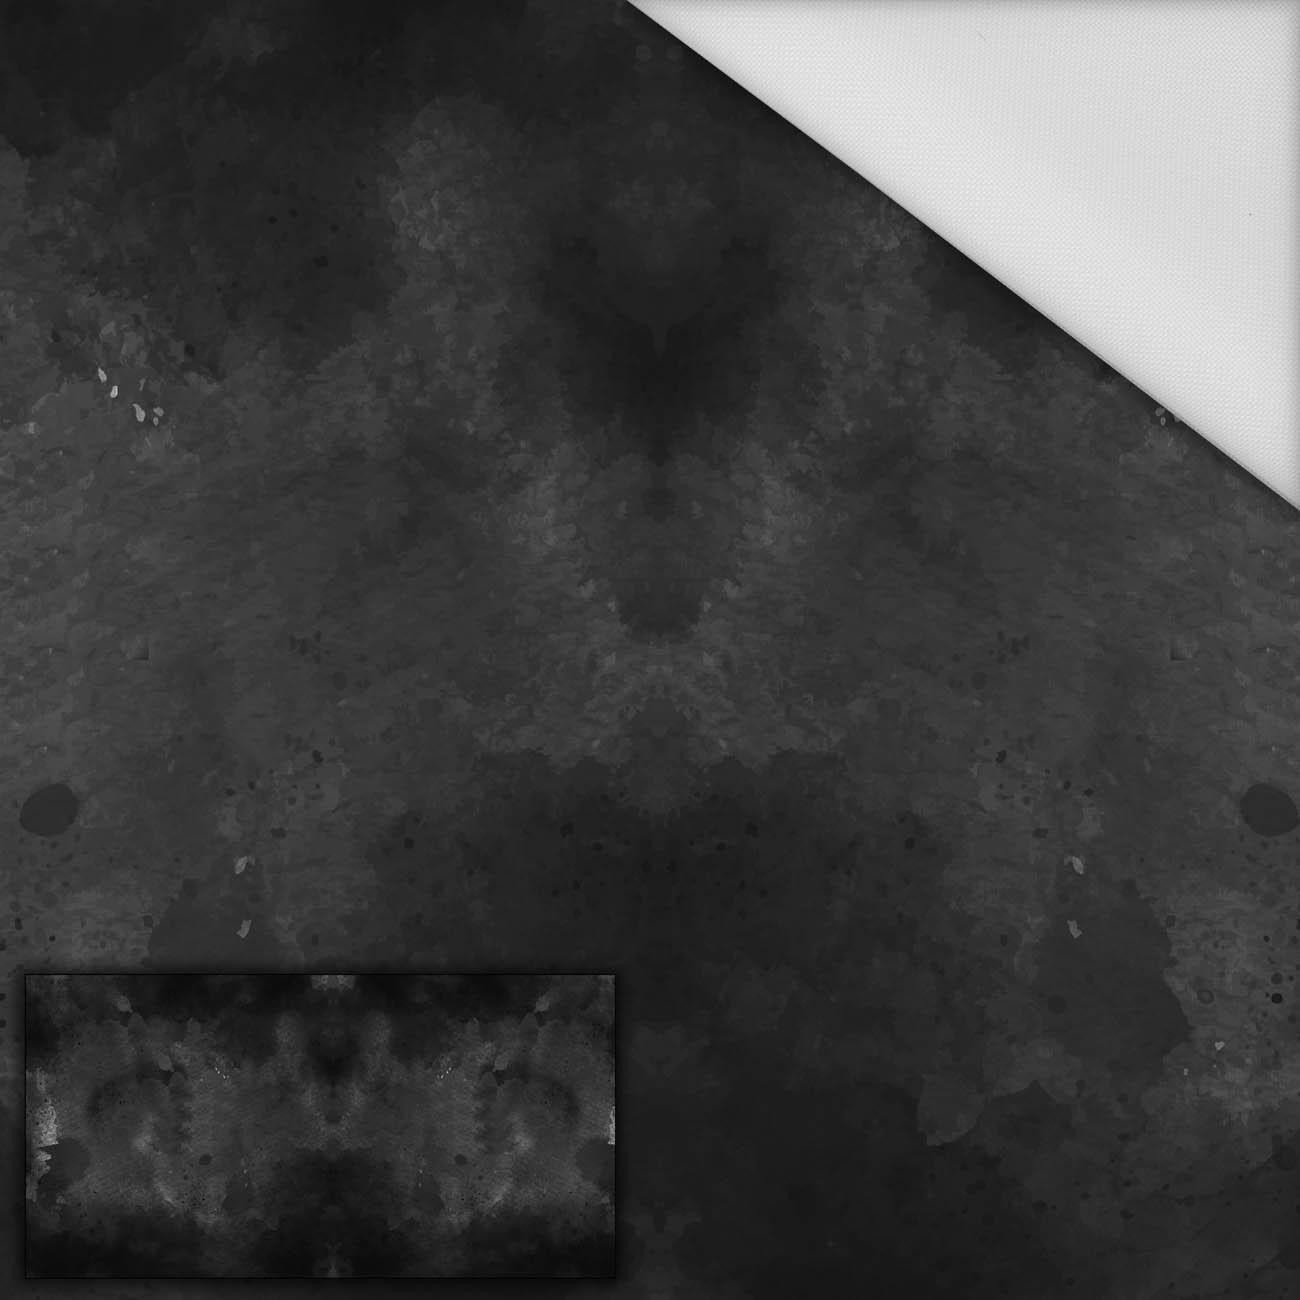 BLACK SPECKS - panel (80cm x 155cm) tkanina wodoodporna